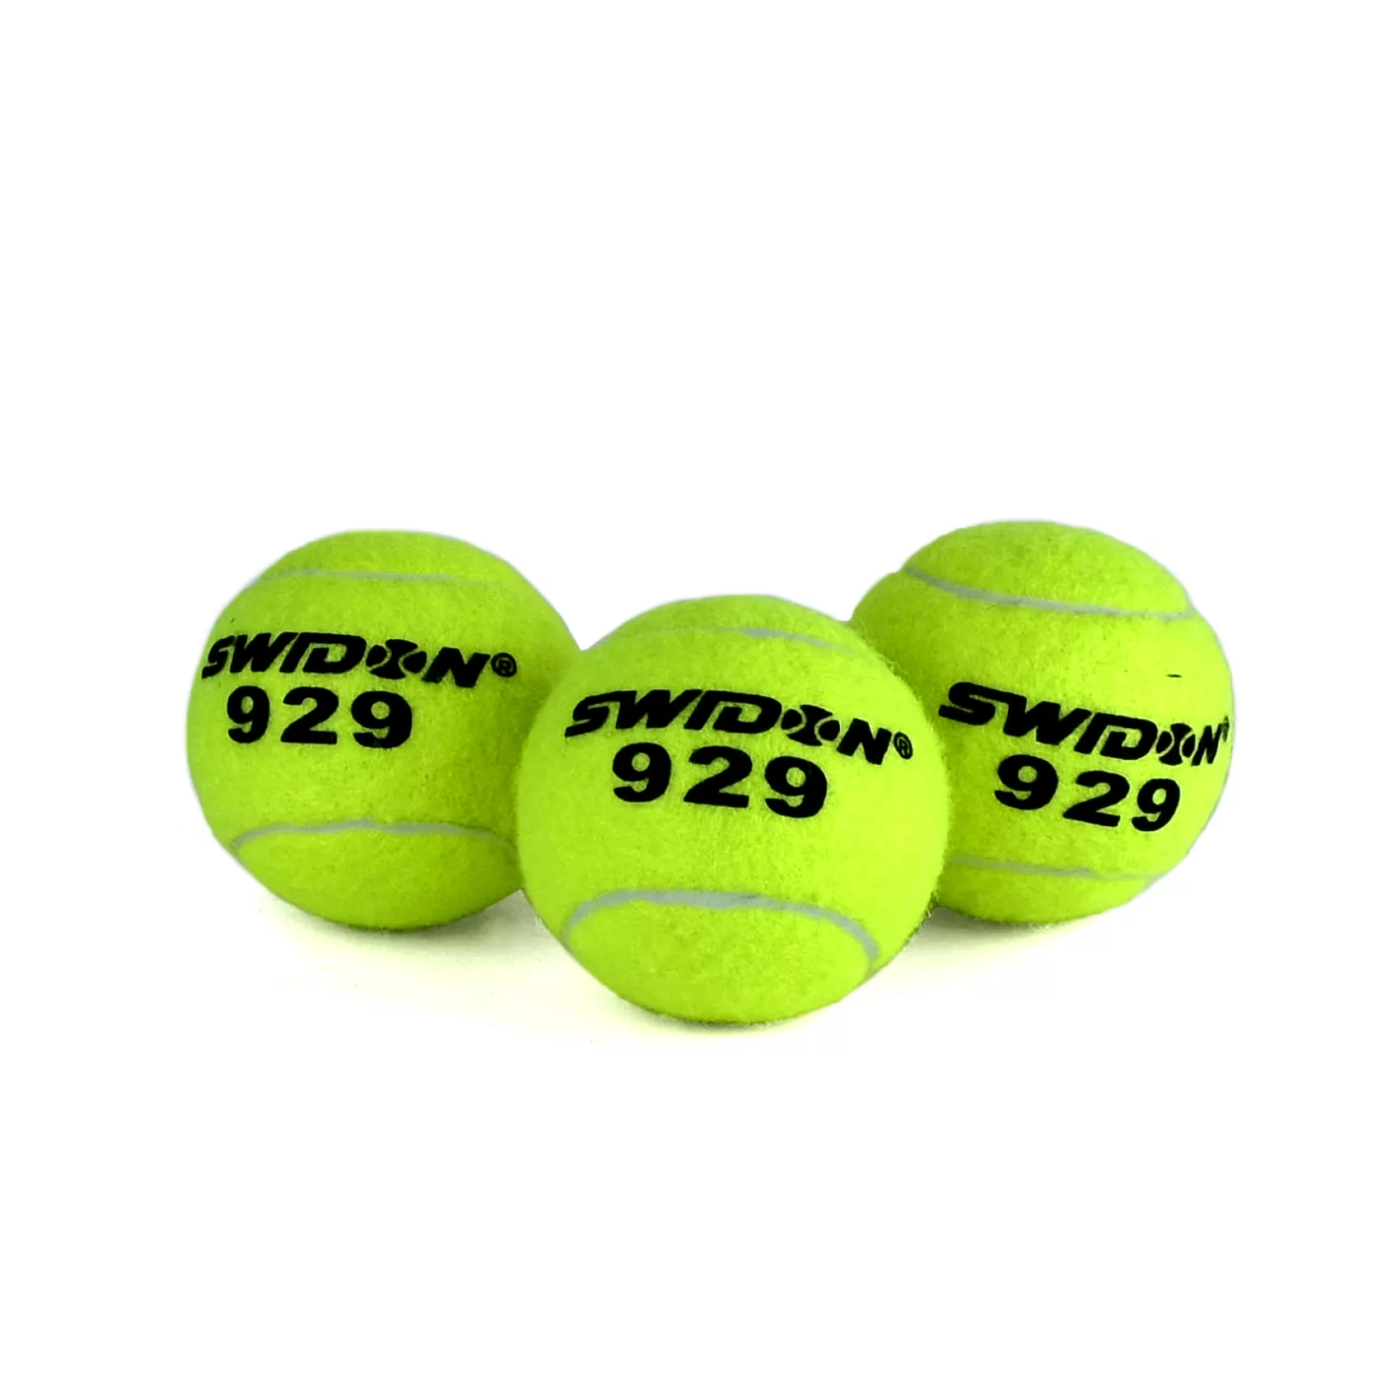 Реальное фото Мяч для тенниса Swidon 929 (3 штуки в тубе) 929 от магазина СпортСЕ